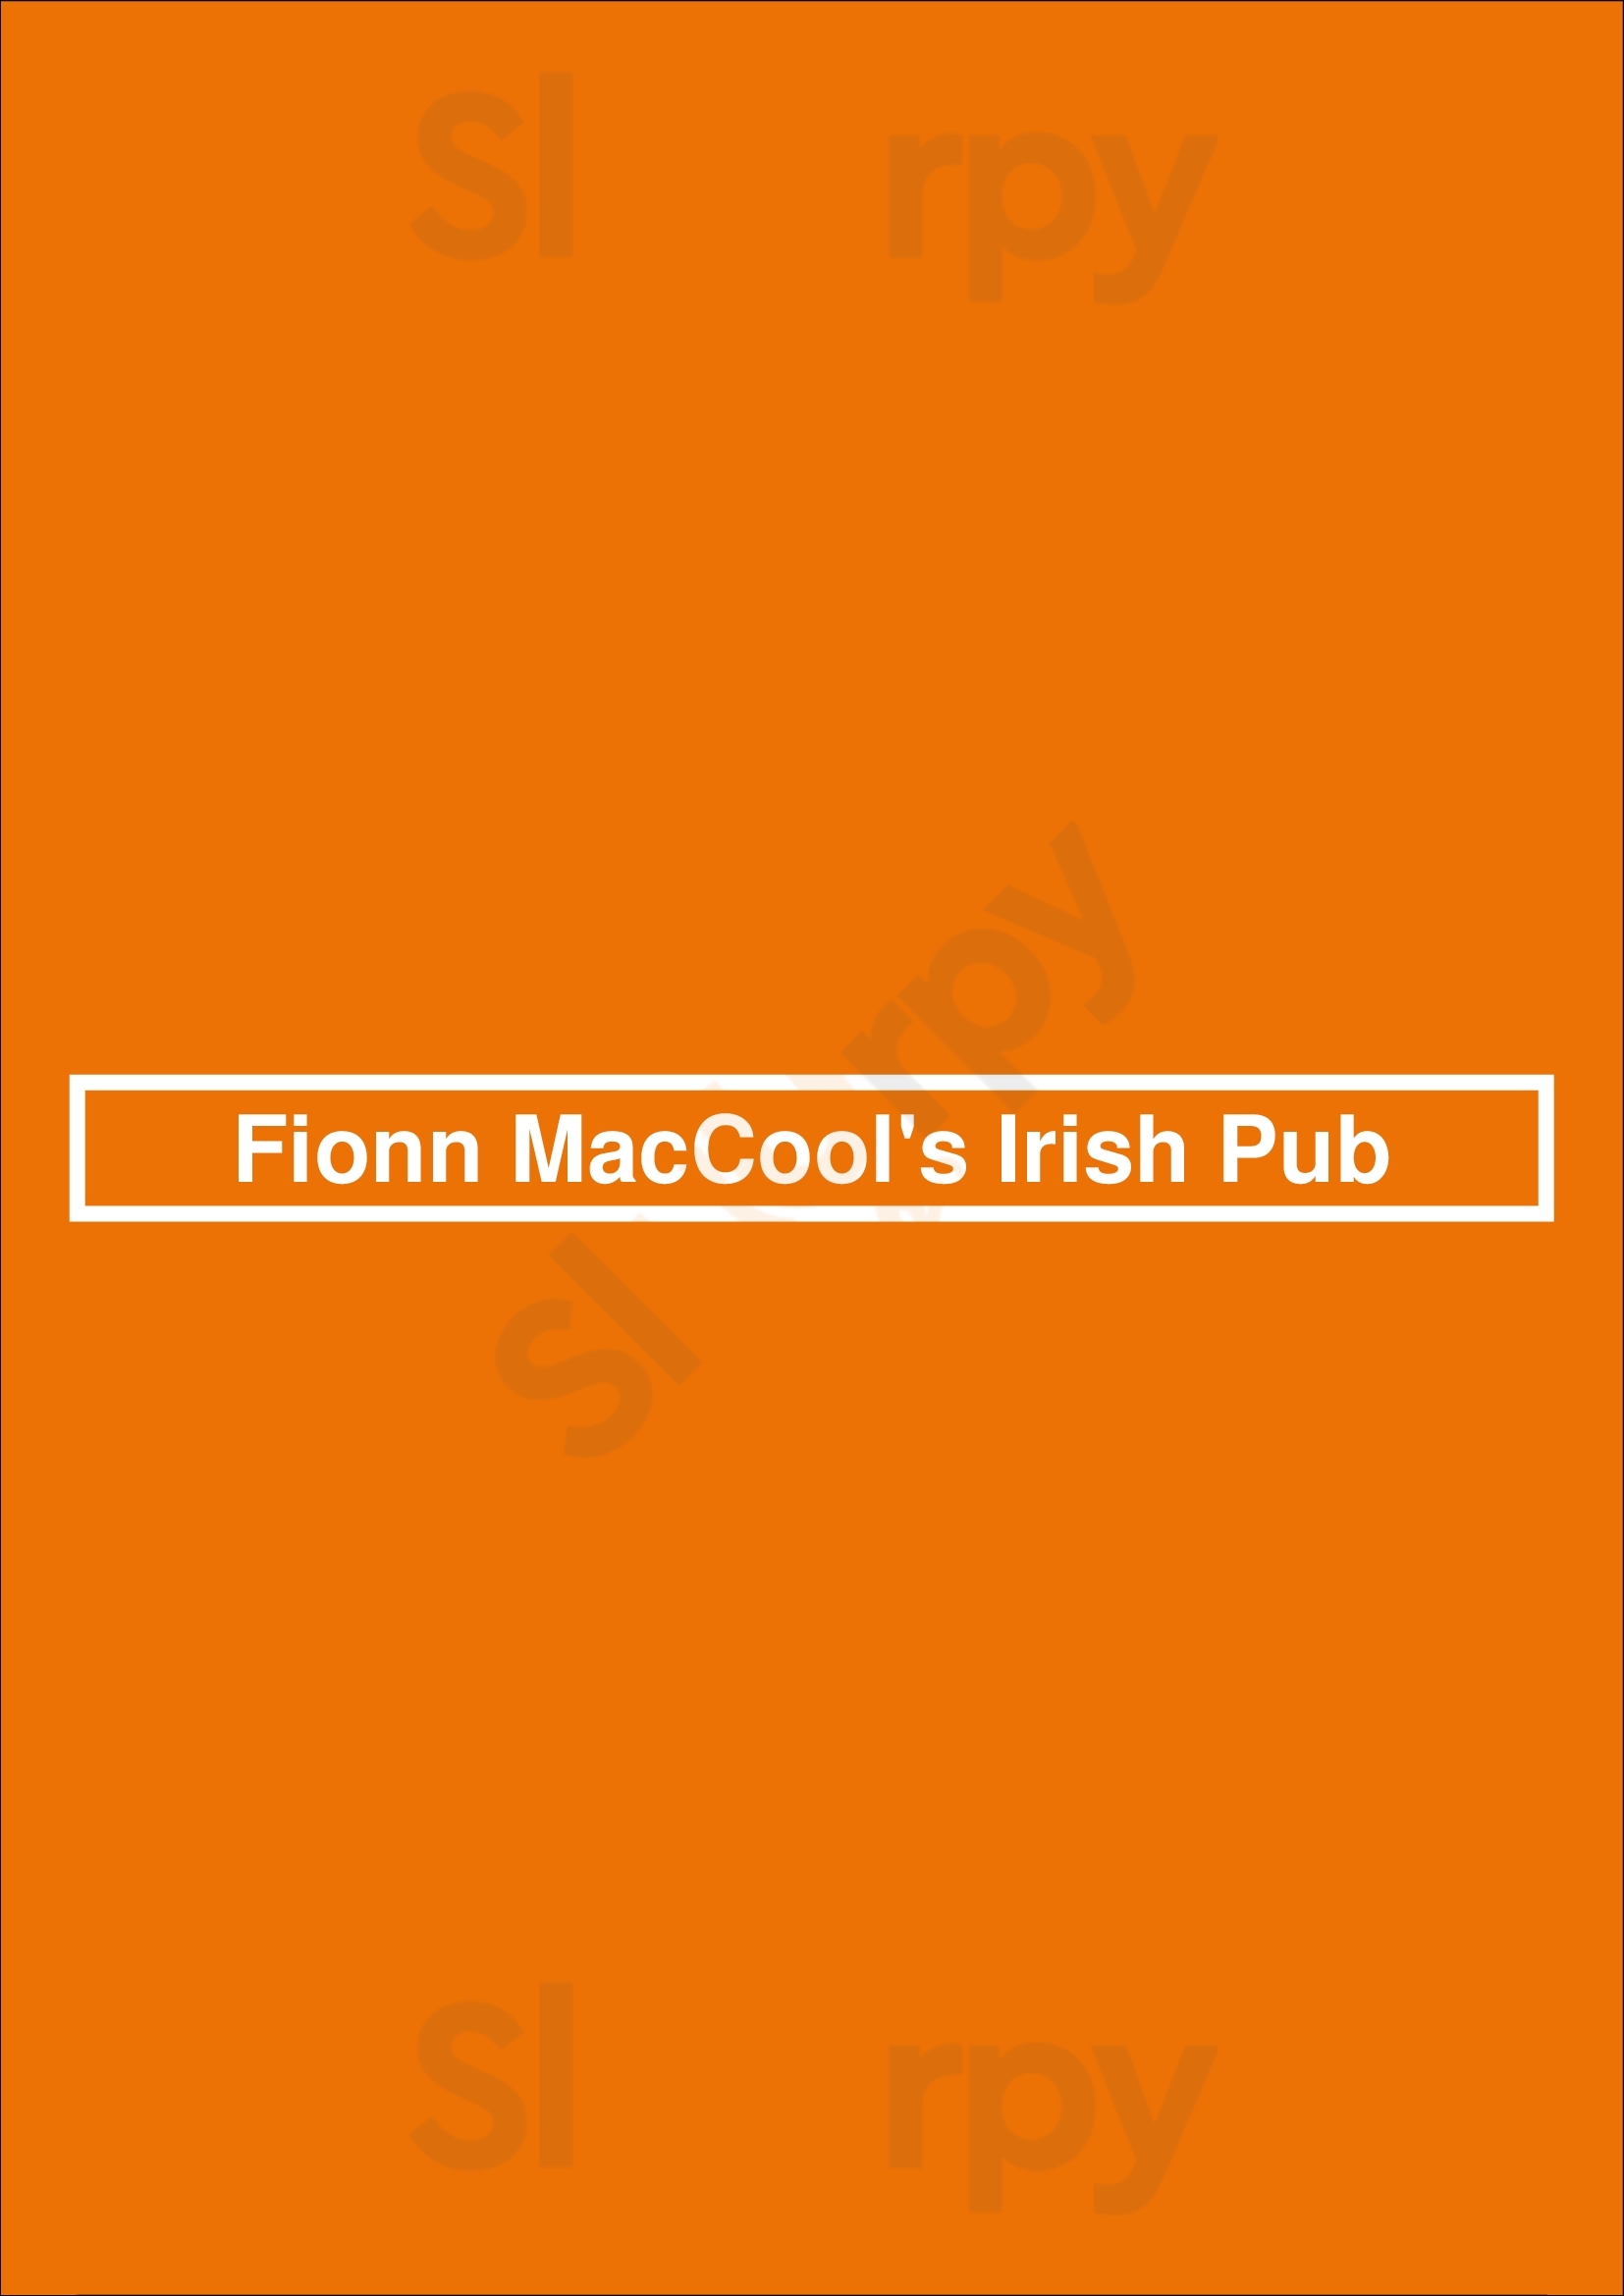 Fionn Maccool's Edmonton Menu - 1